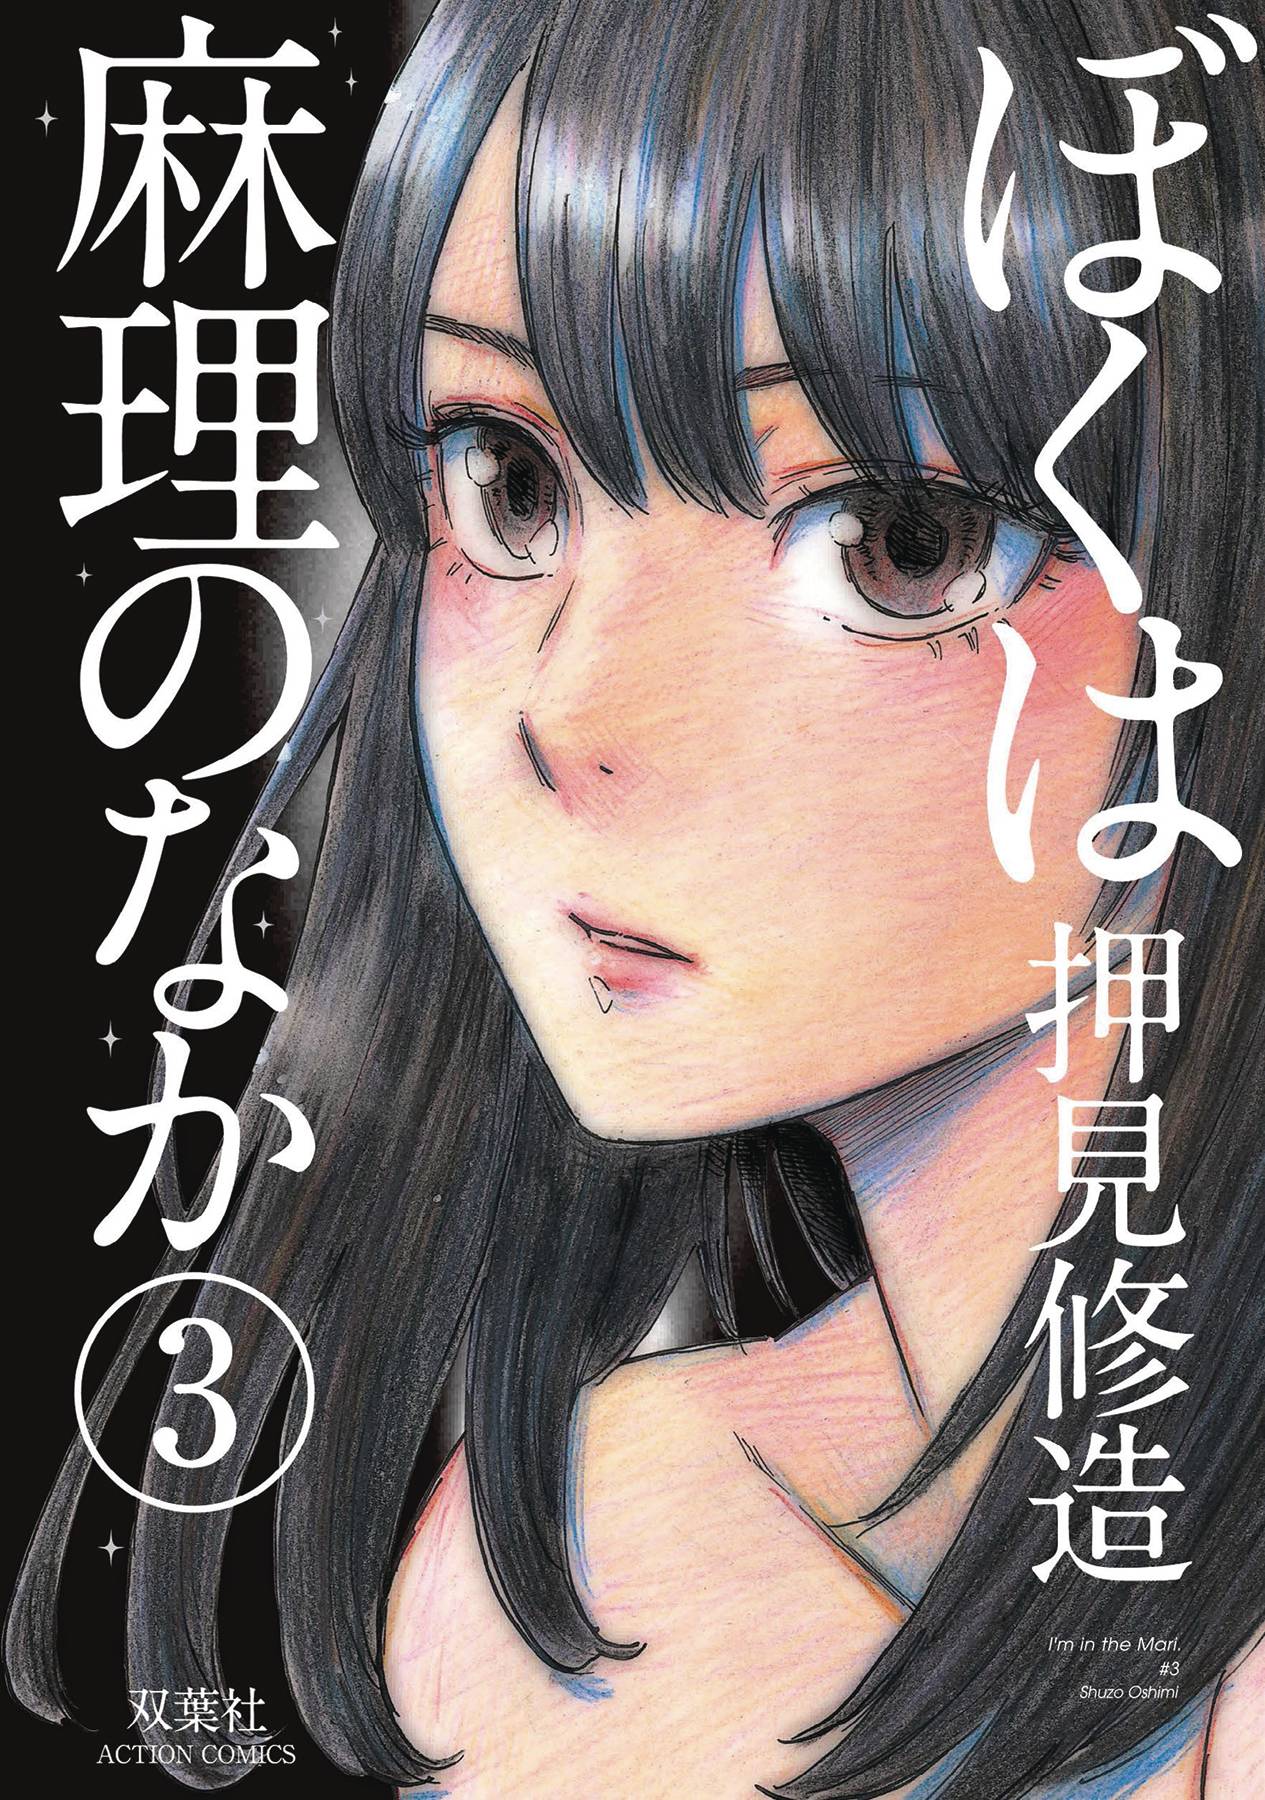 Inside Mari Manga Volume 3 (Of 9)